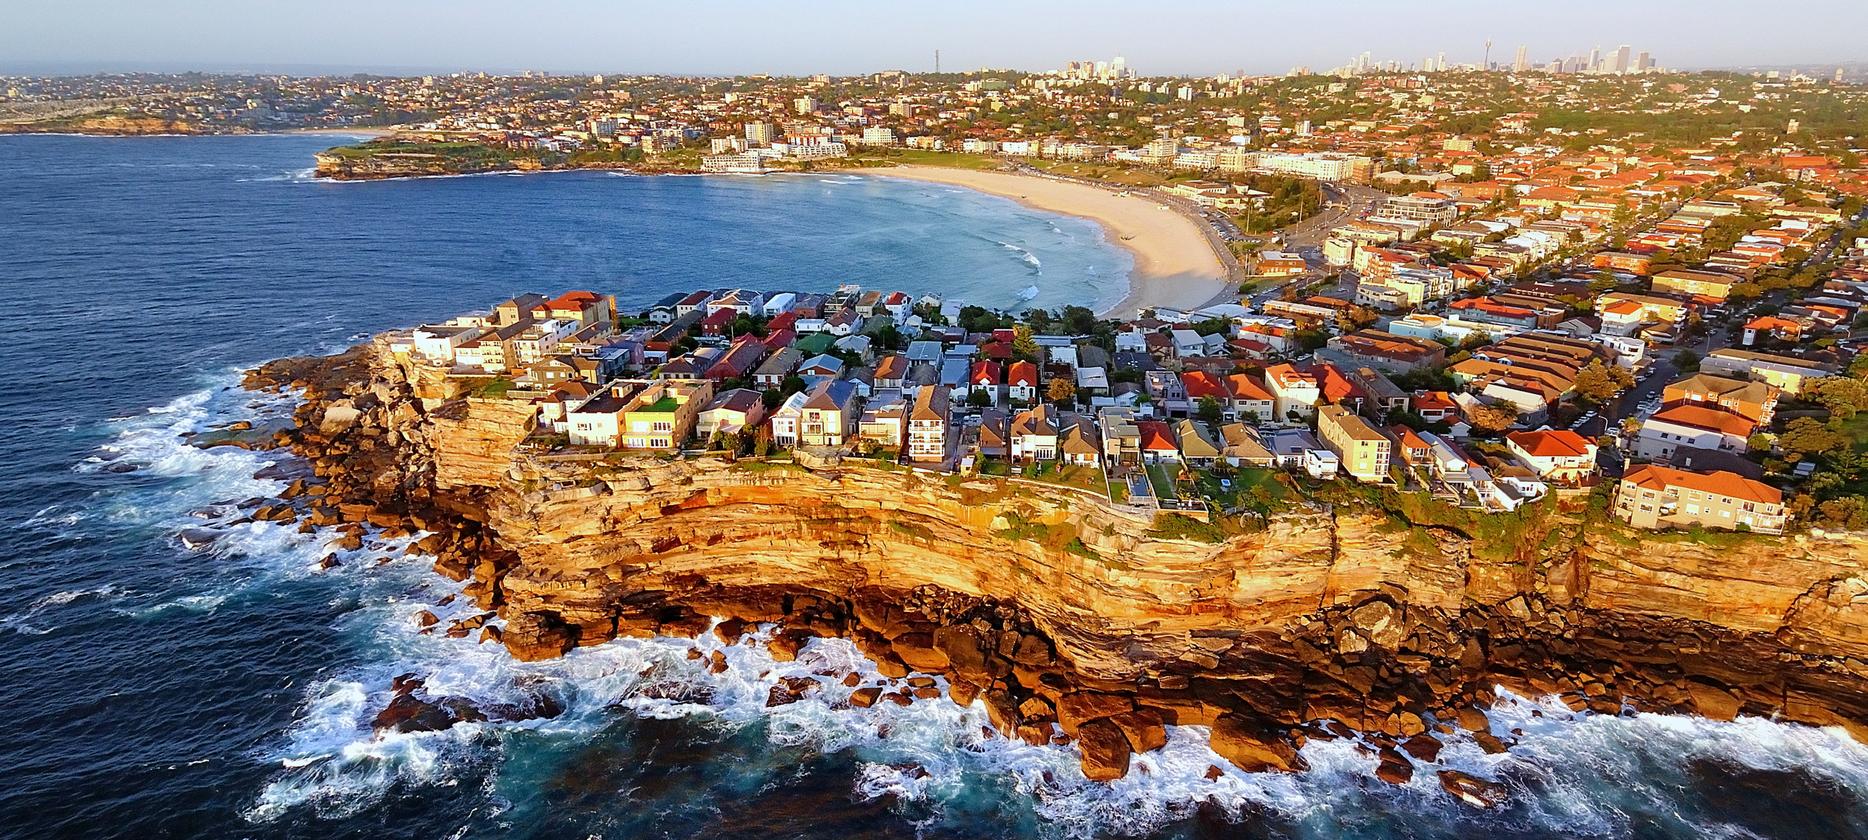 Sydney coastline properties